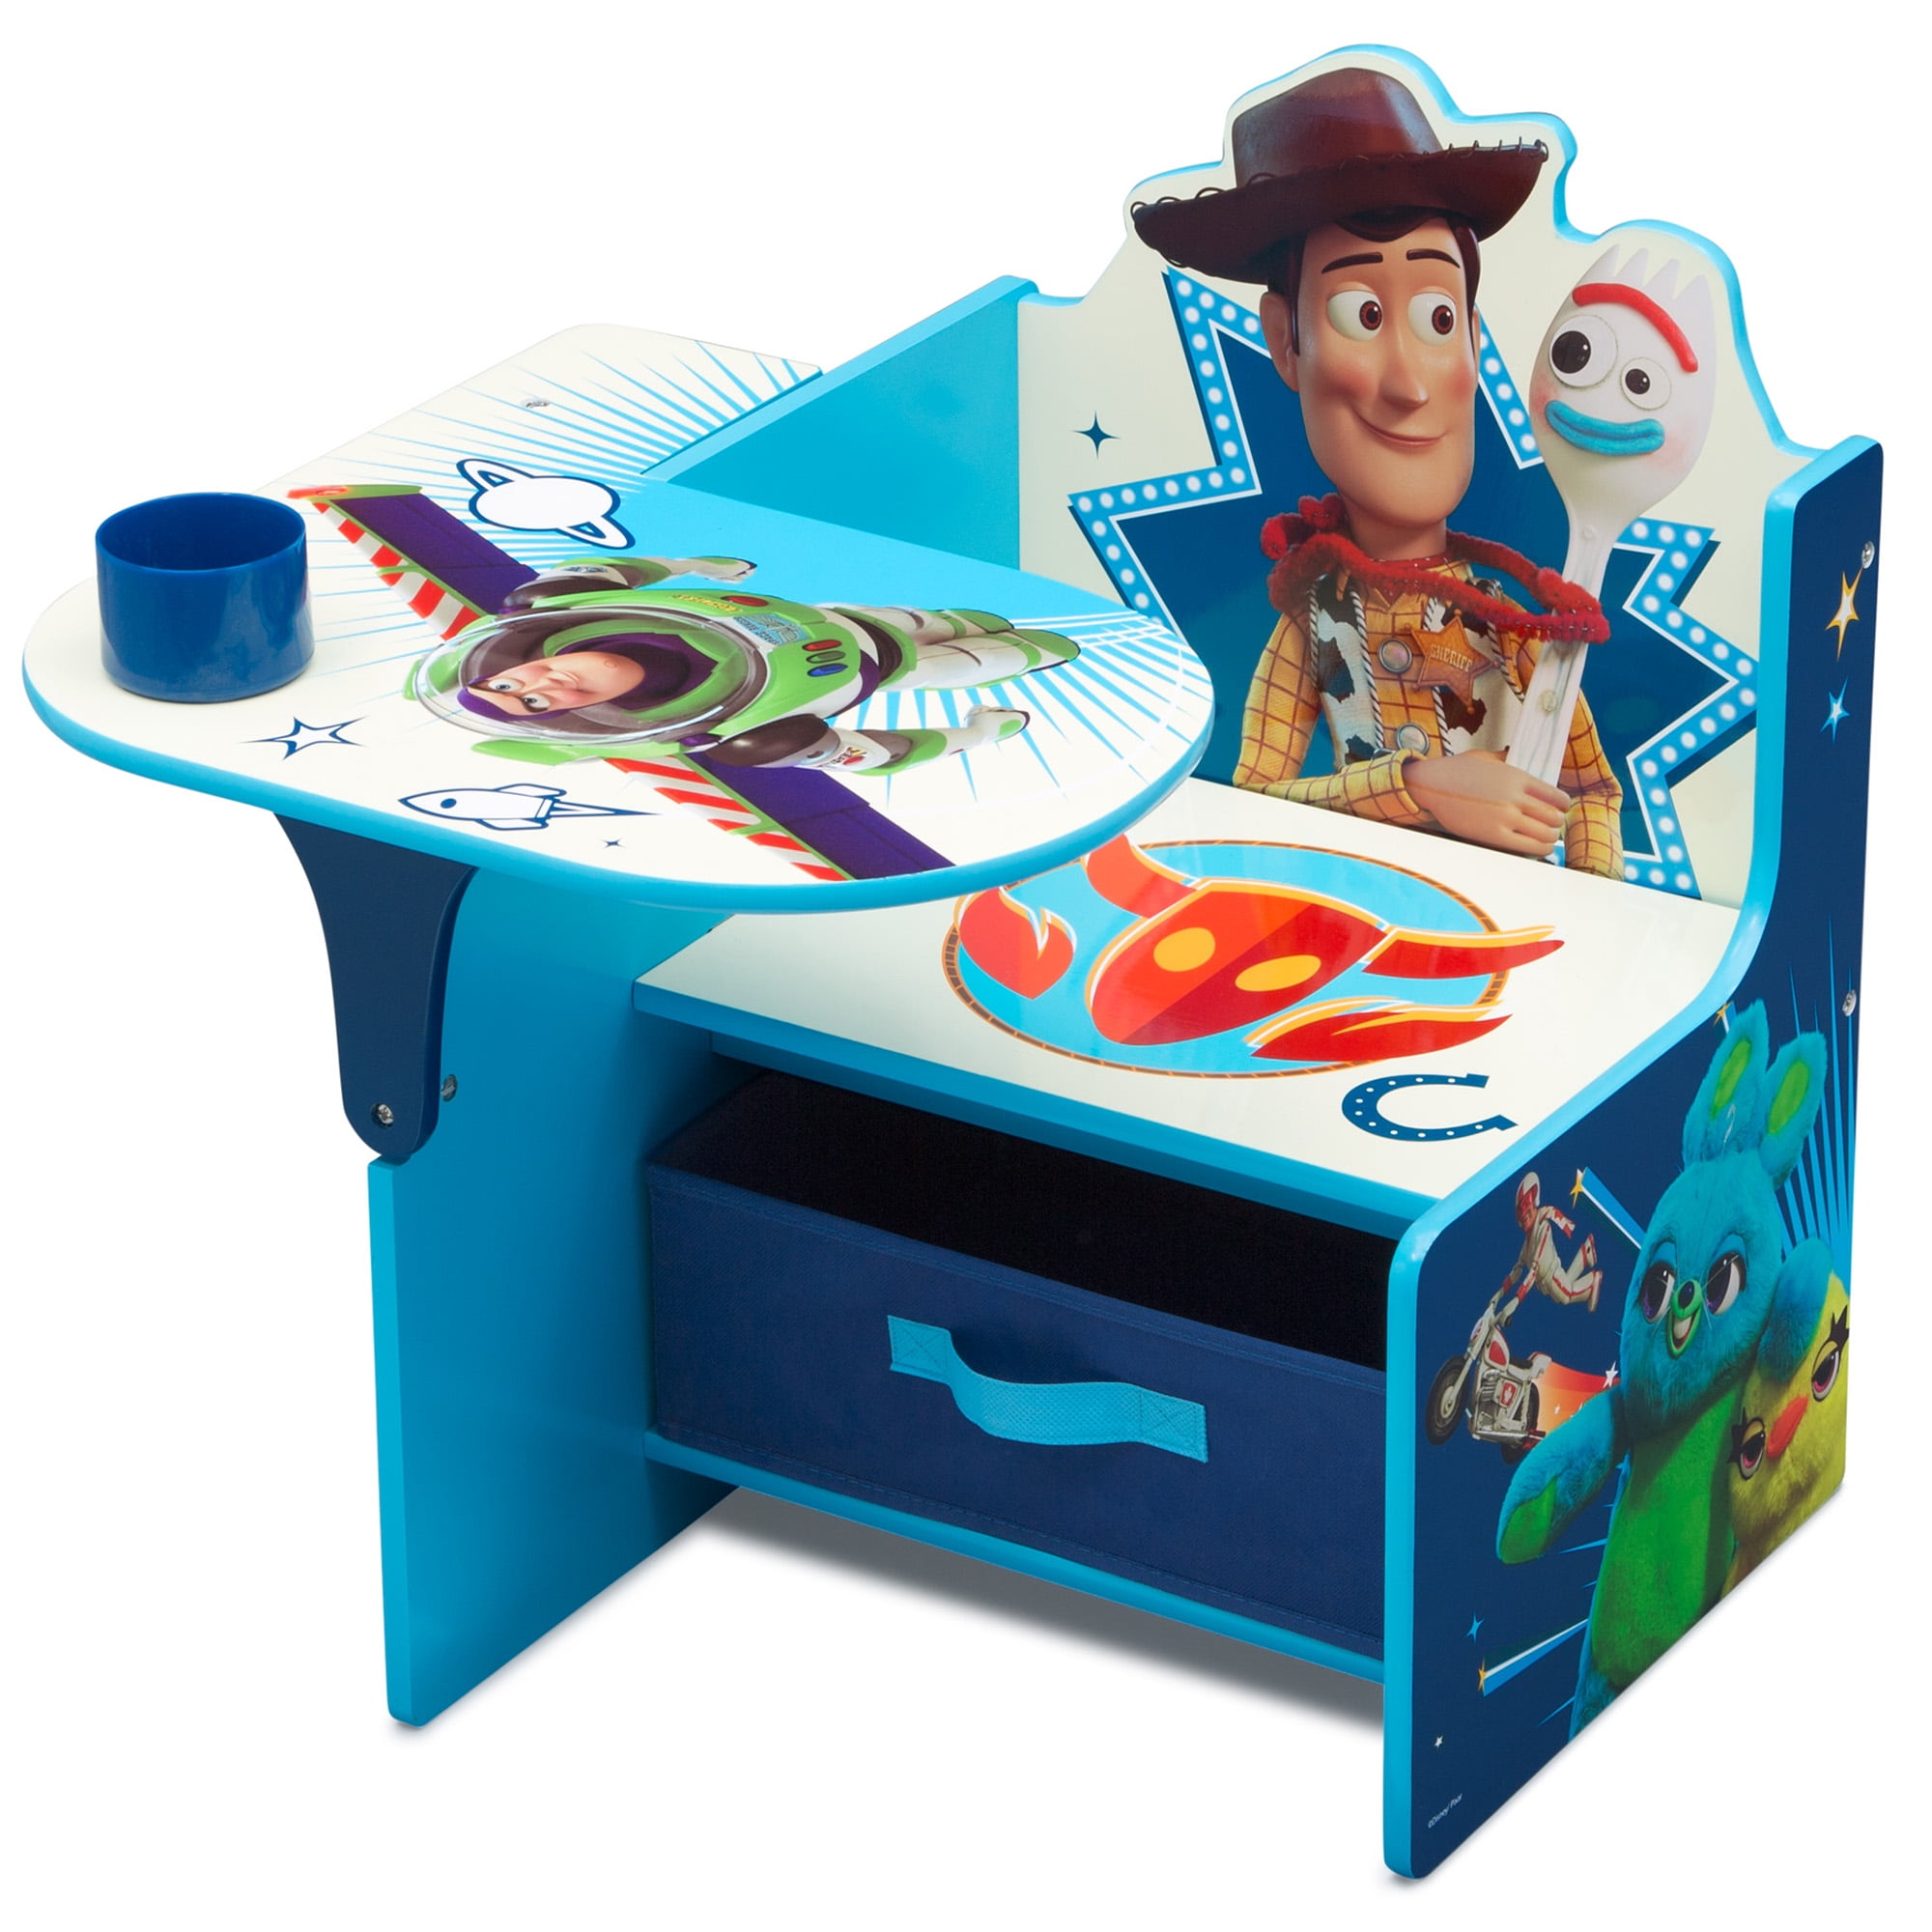 Spider-Man Chair Desk Storage Bin Colorful Graphics Storage Removable Cup Holder